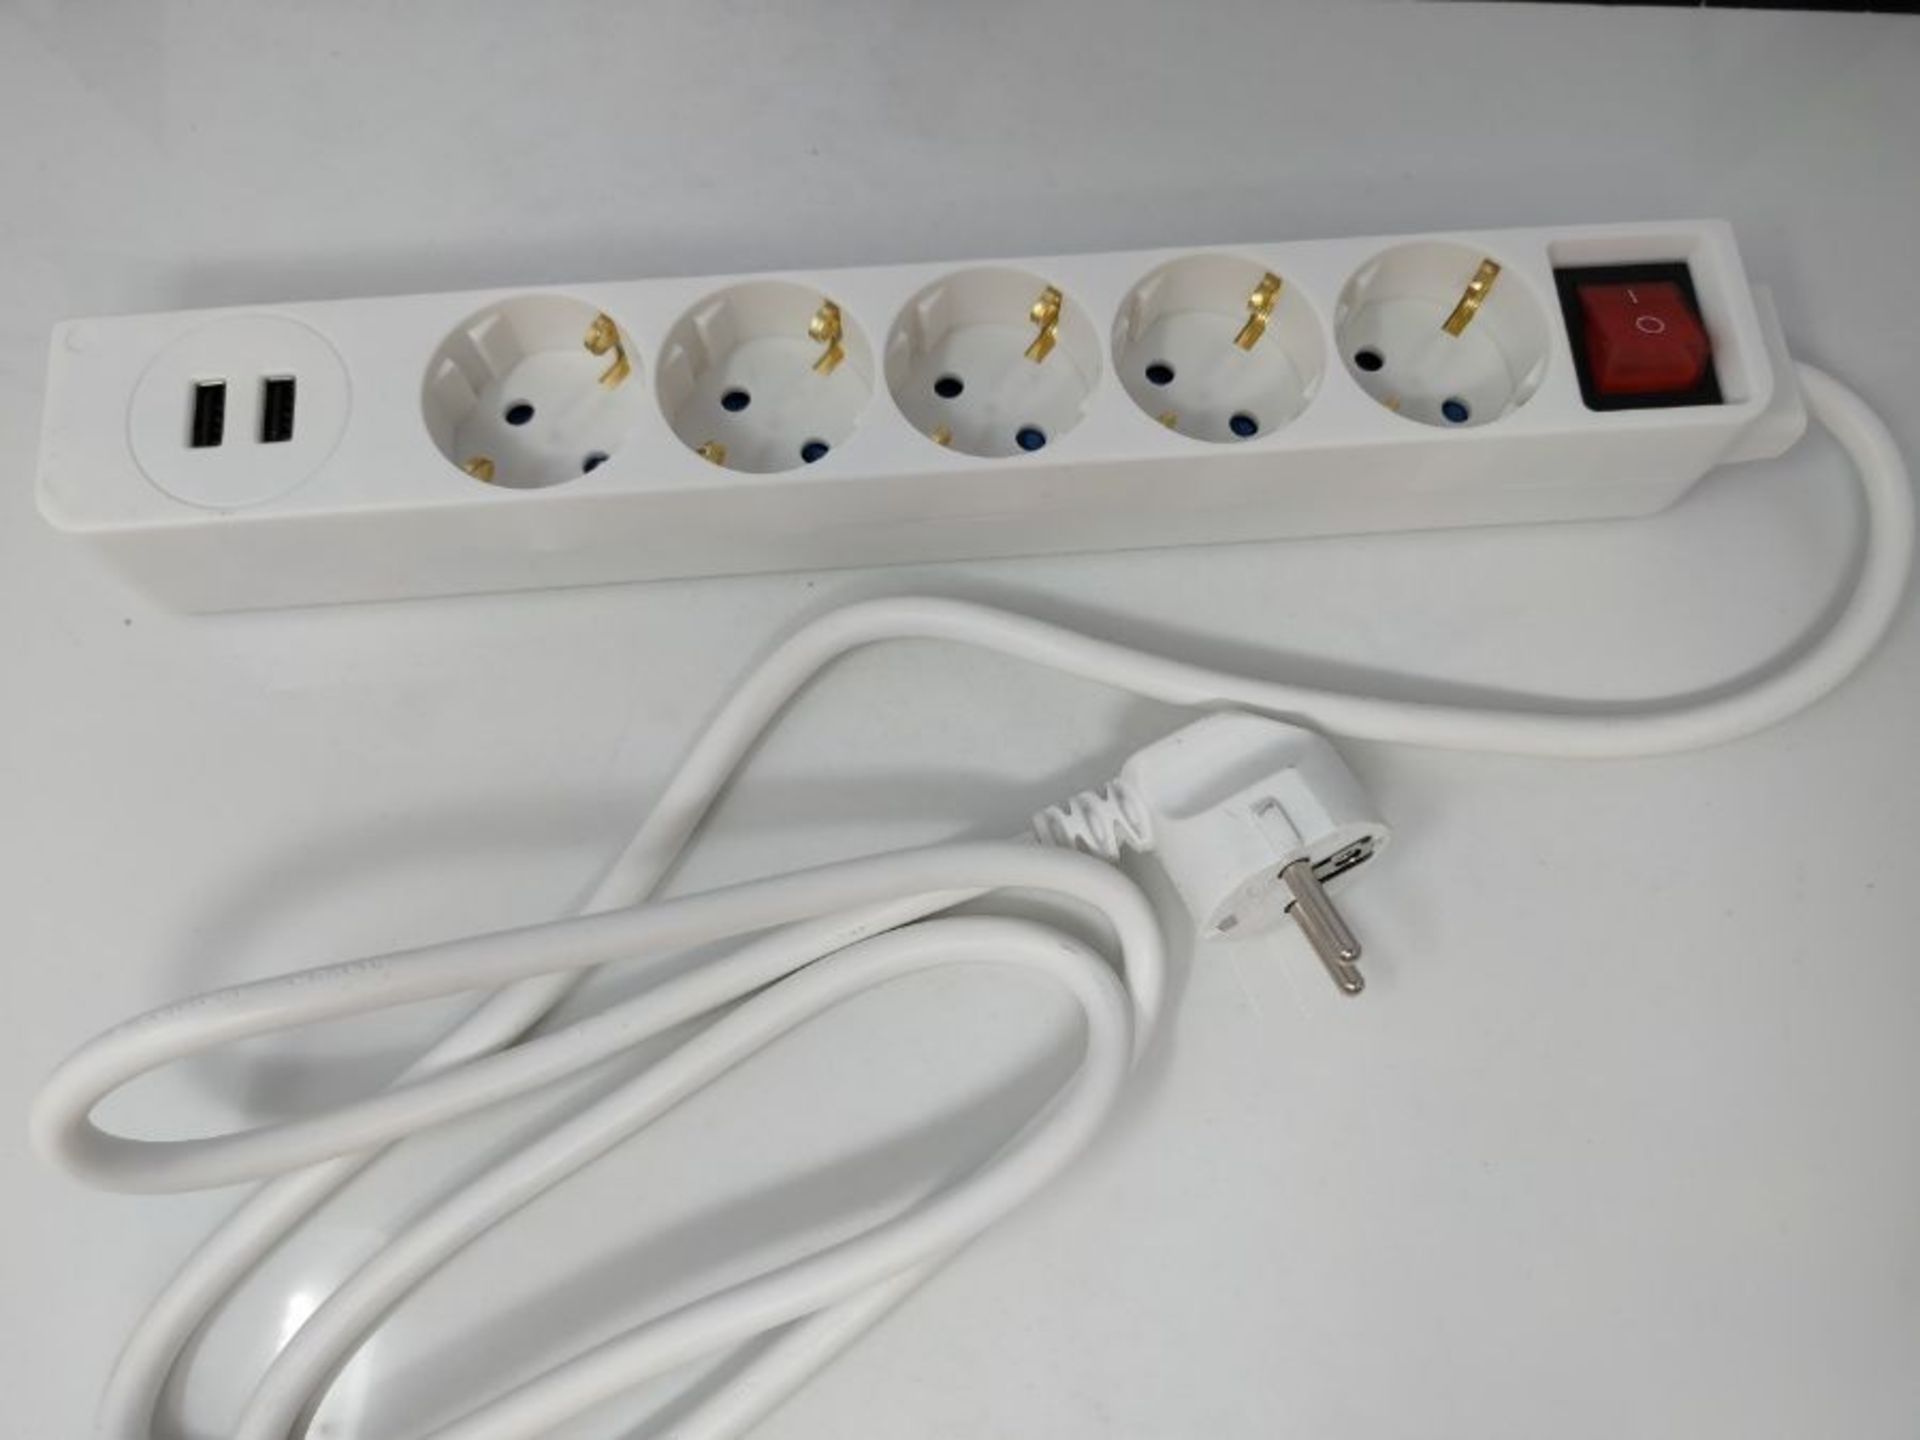 USB 3.4A 5 Way Socket Strip White - Image 3 of 3